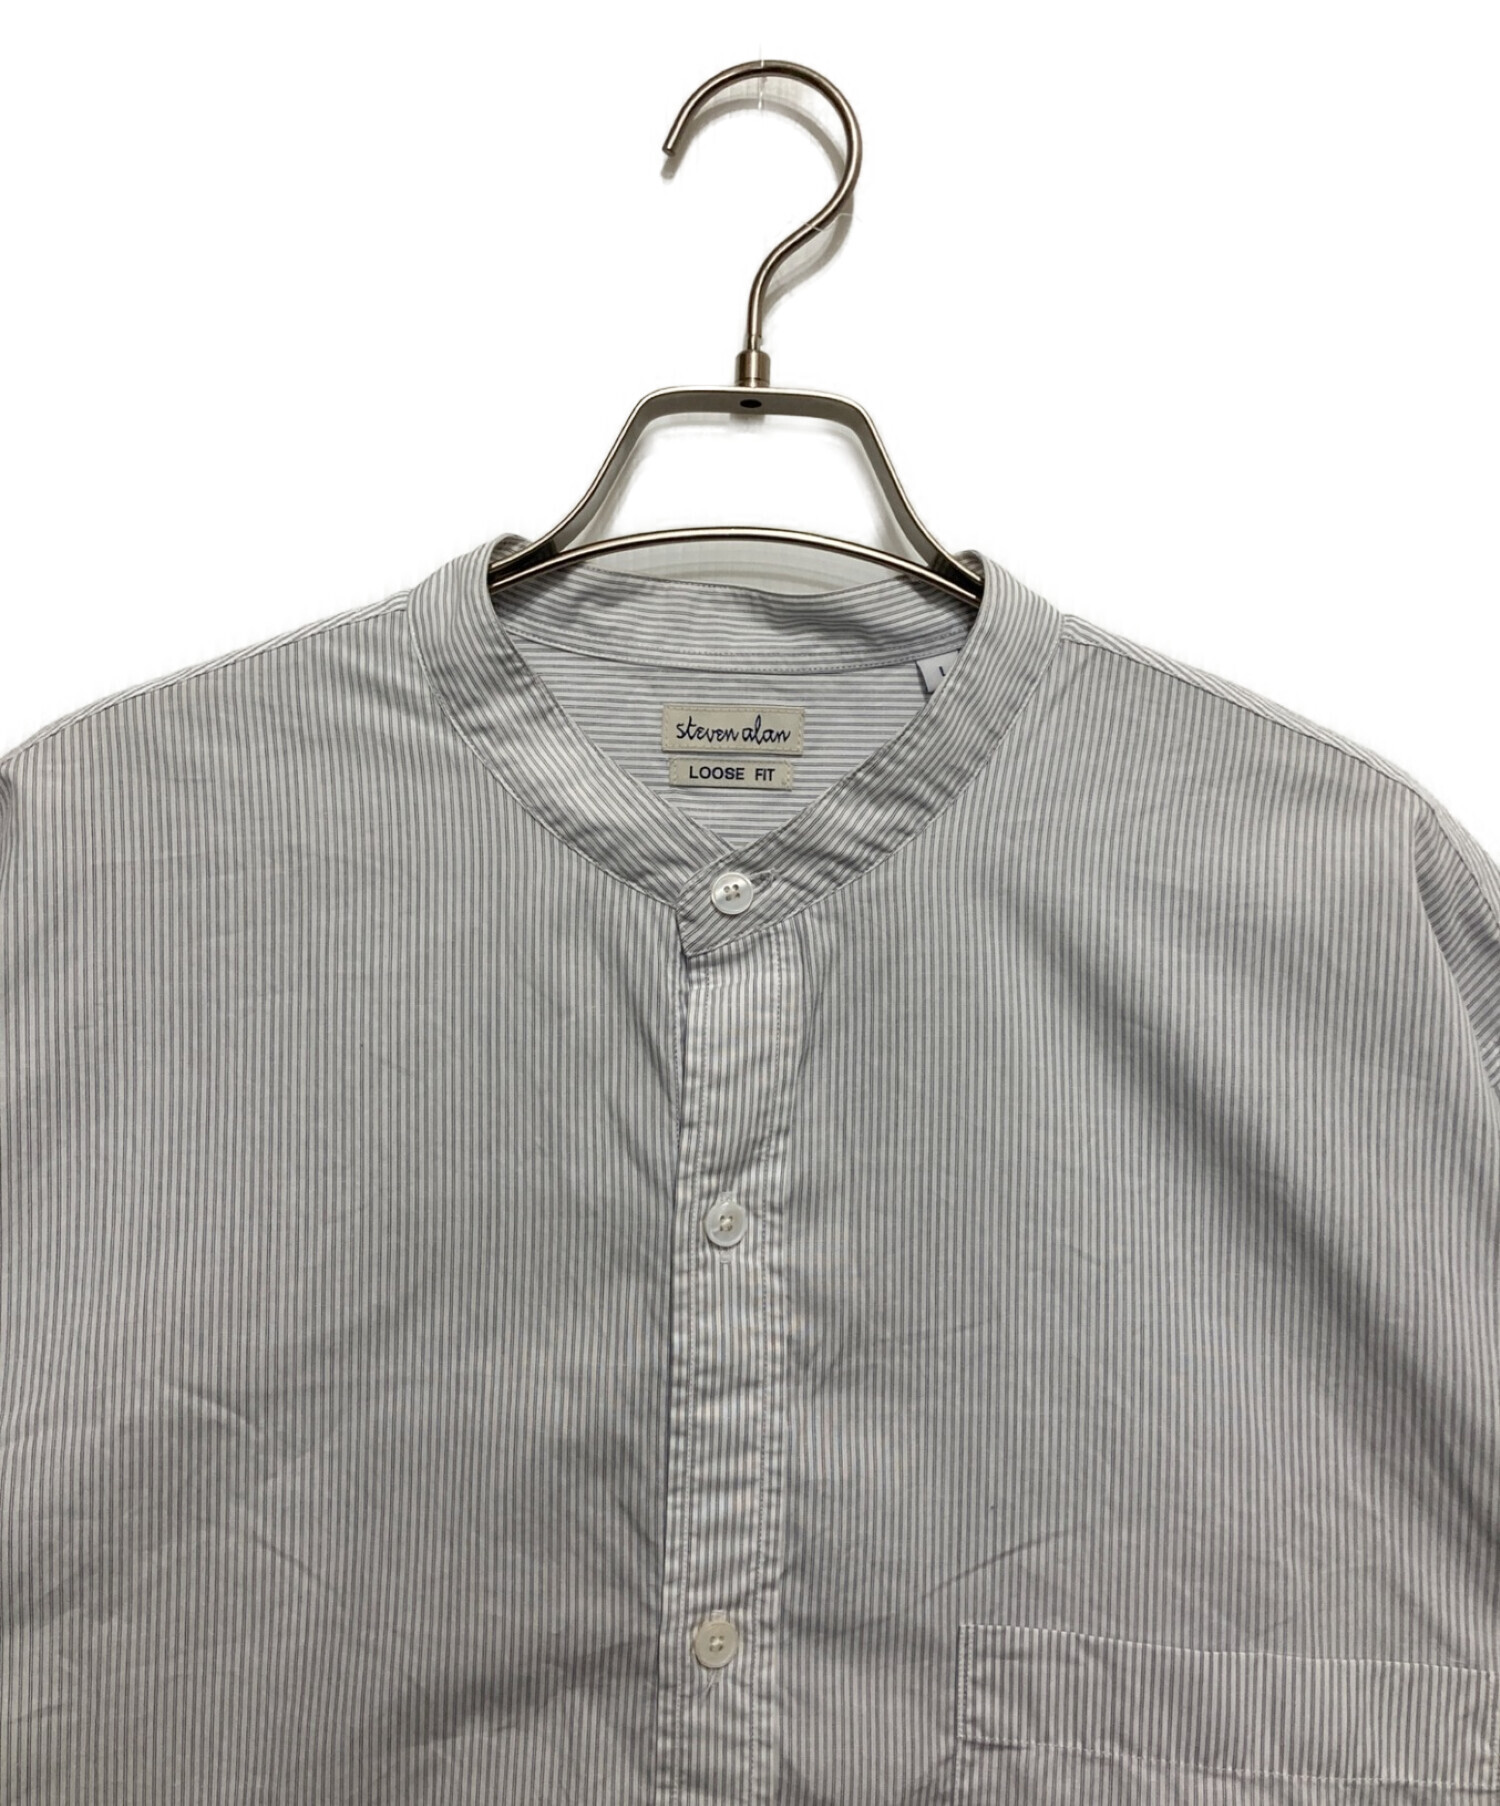 Fresh Clean Threads Charcoal Grey Crewneck T-Shirt for Men - Pre